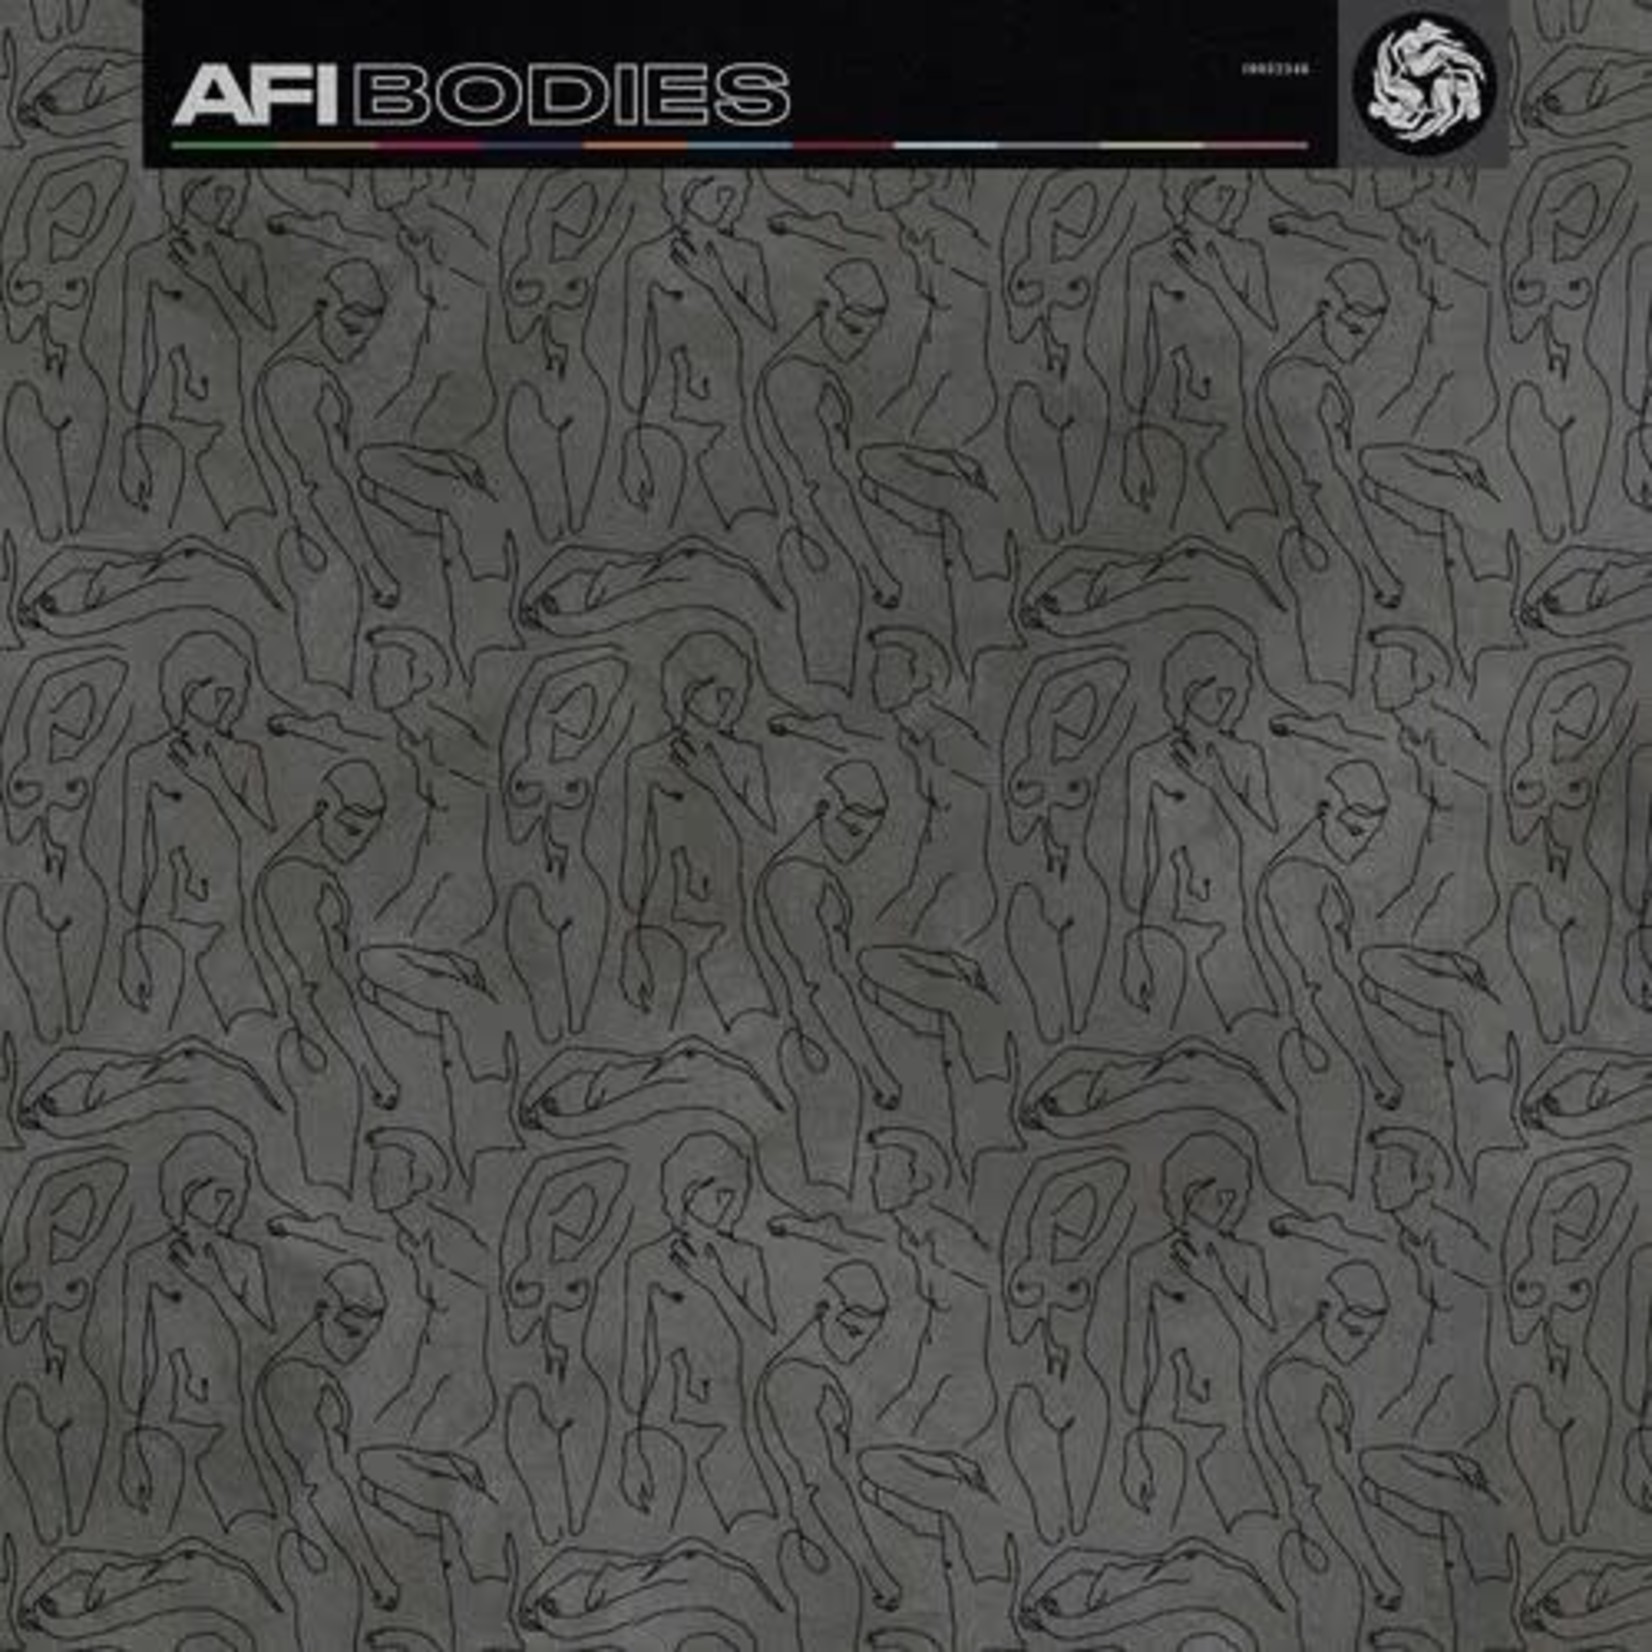 AFI - Bodies [LP]